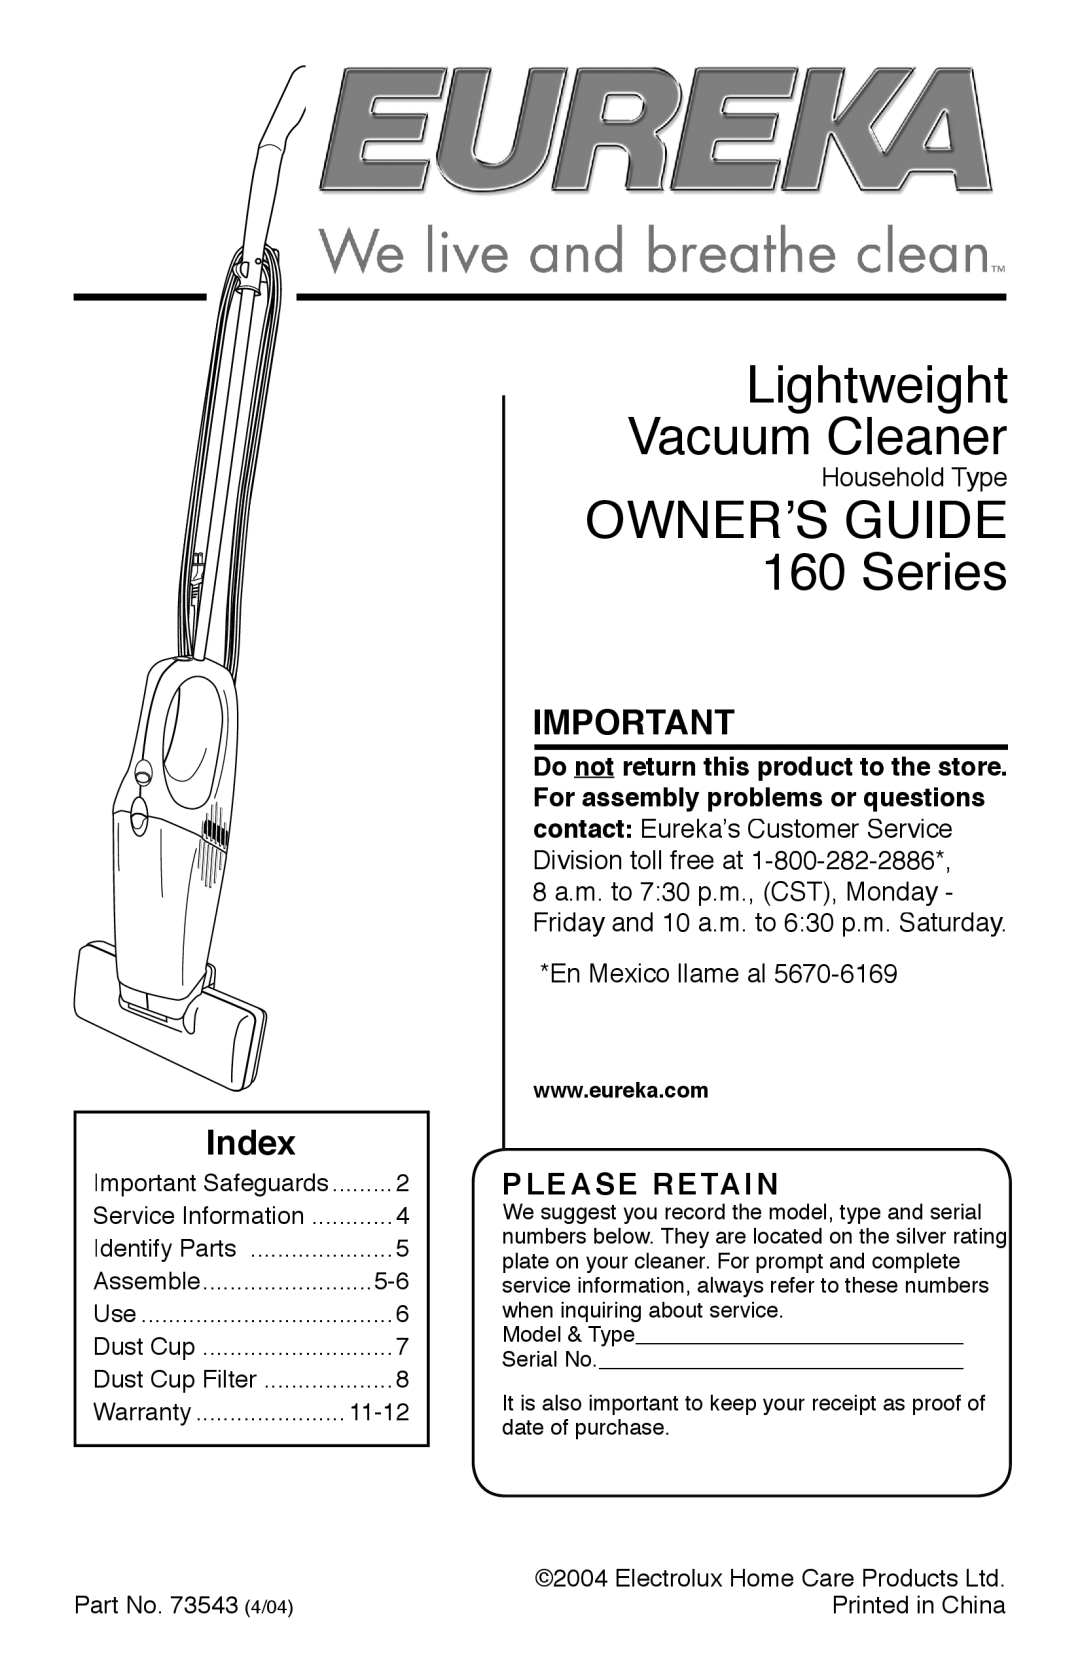 Eureka warranty Lightweight Vacuum Cleaner, OWNERʼS GUIDE 160 Series, Index, Please Retain, Household Type 